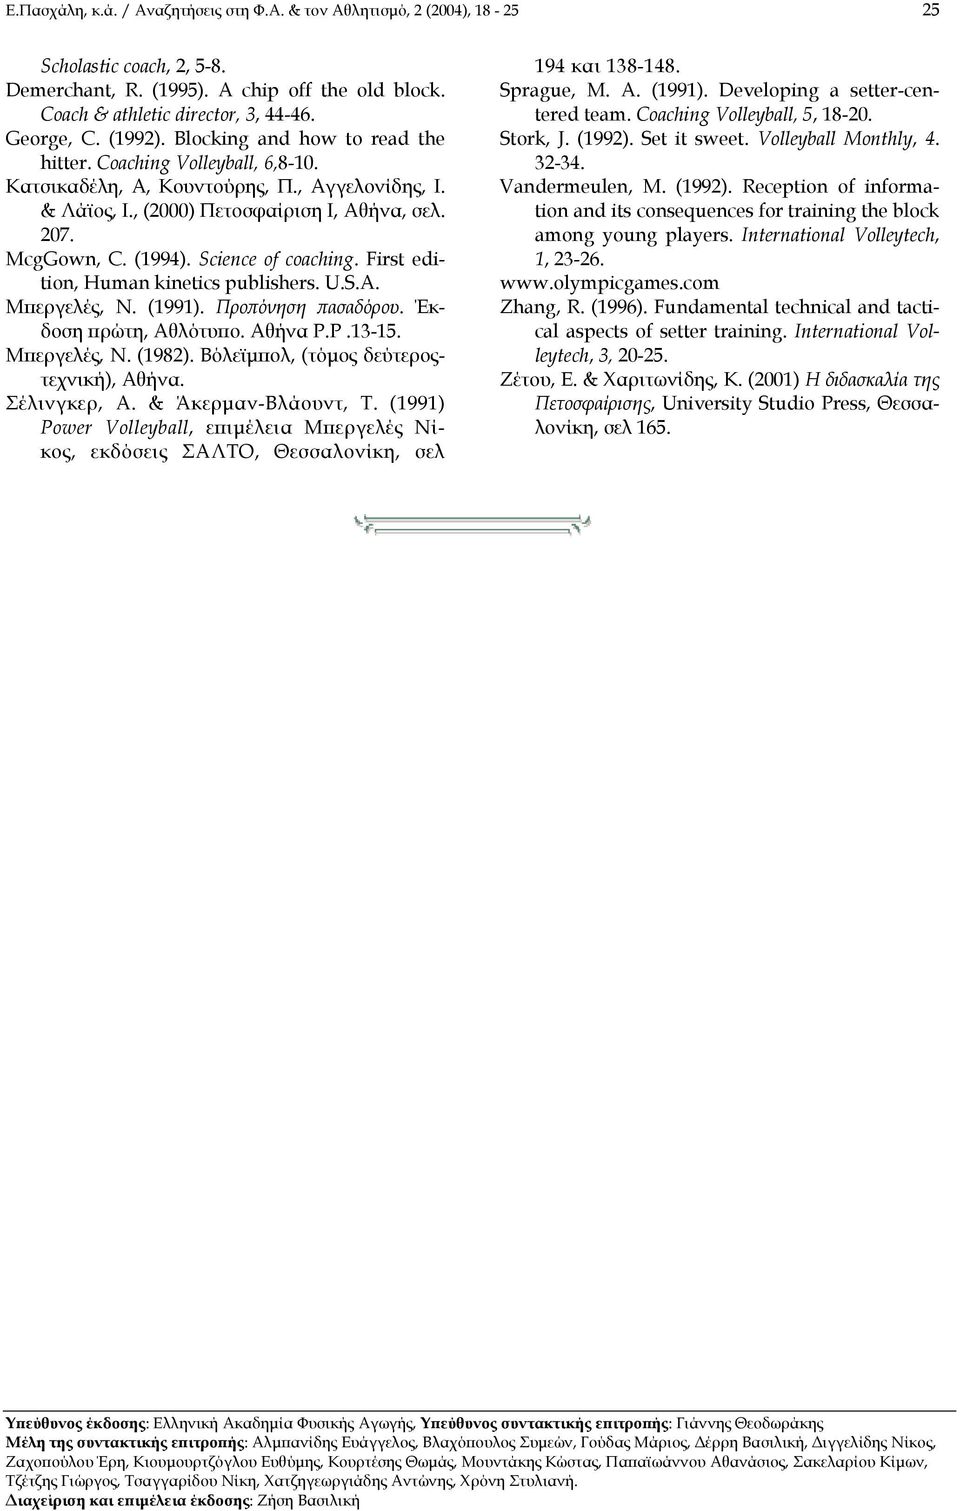 Science of coaching. First edition, Human kinetics publishers. U.S.A. Μπεργελές, Ν. (1991). Προπόνηση πασαδόρου. Έκδοση πρώτη, Αθλότυπο. Αθήνα P.P.13-15. Μπεργελές, Ν. (1982).